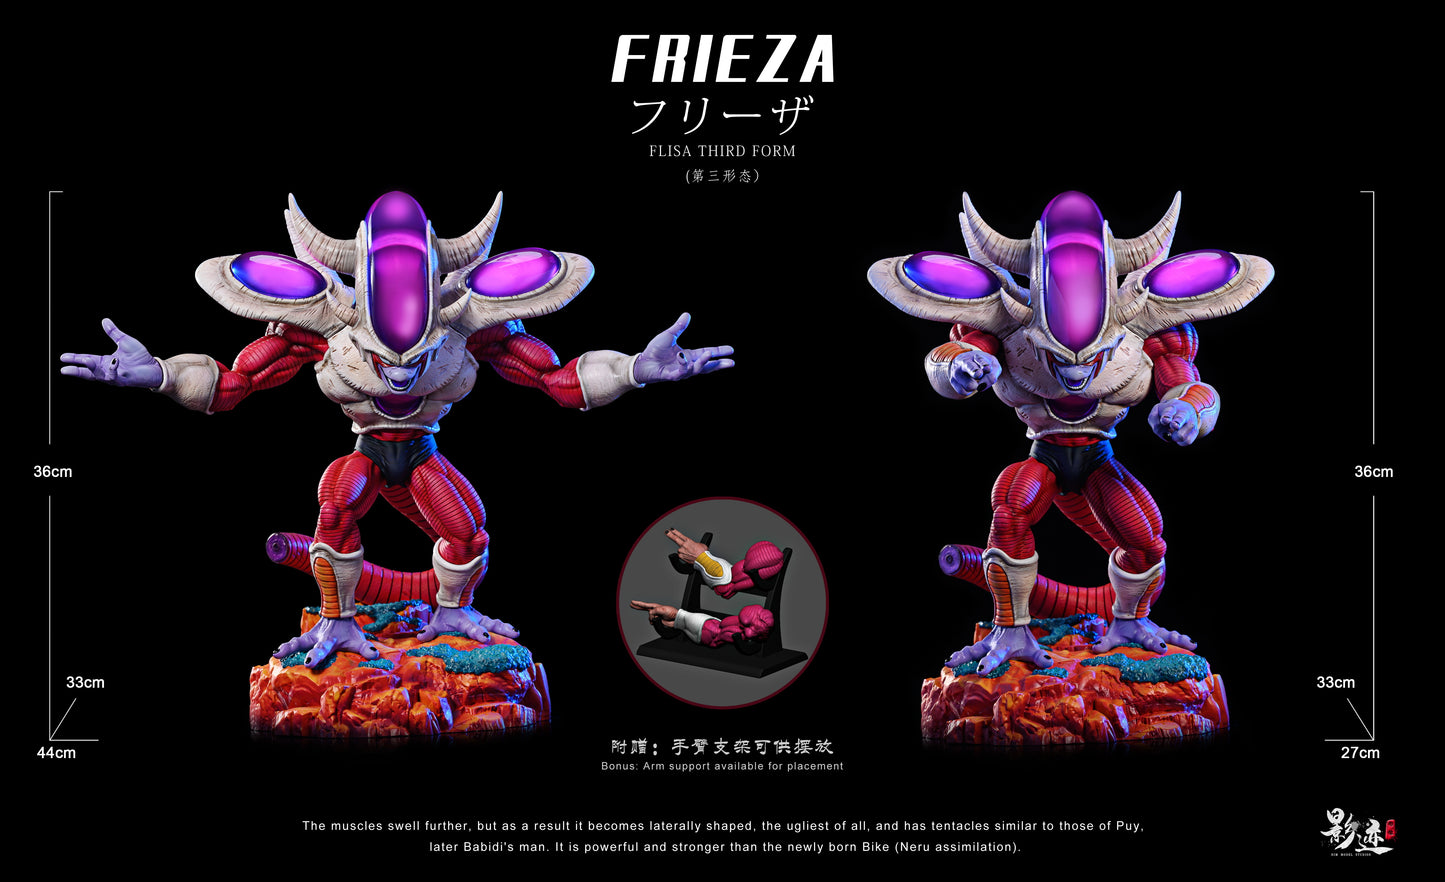 DIM - Frieza Third Form